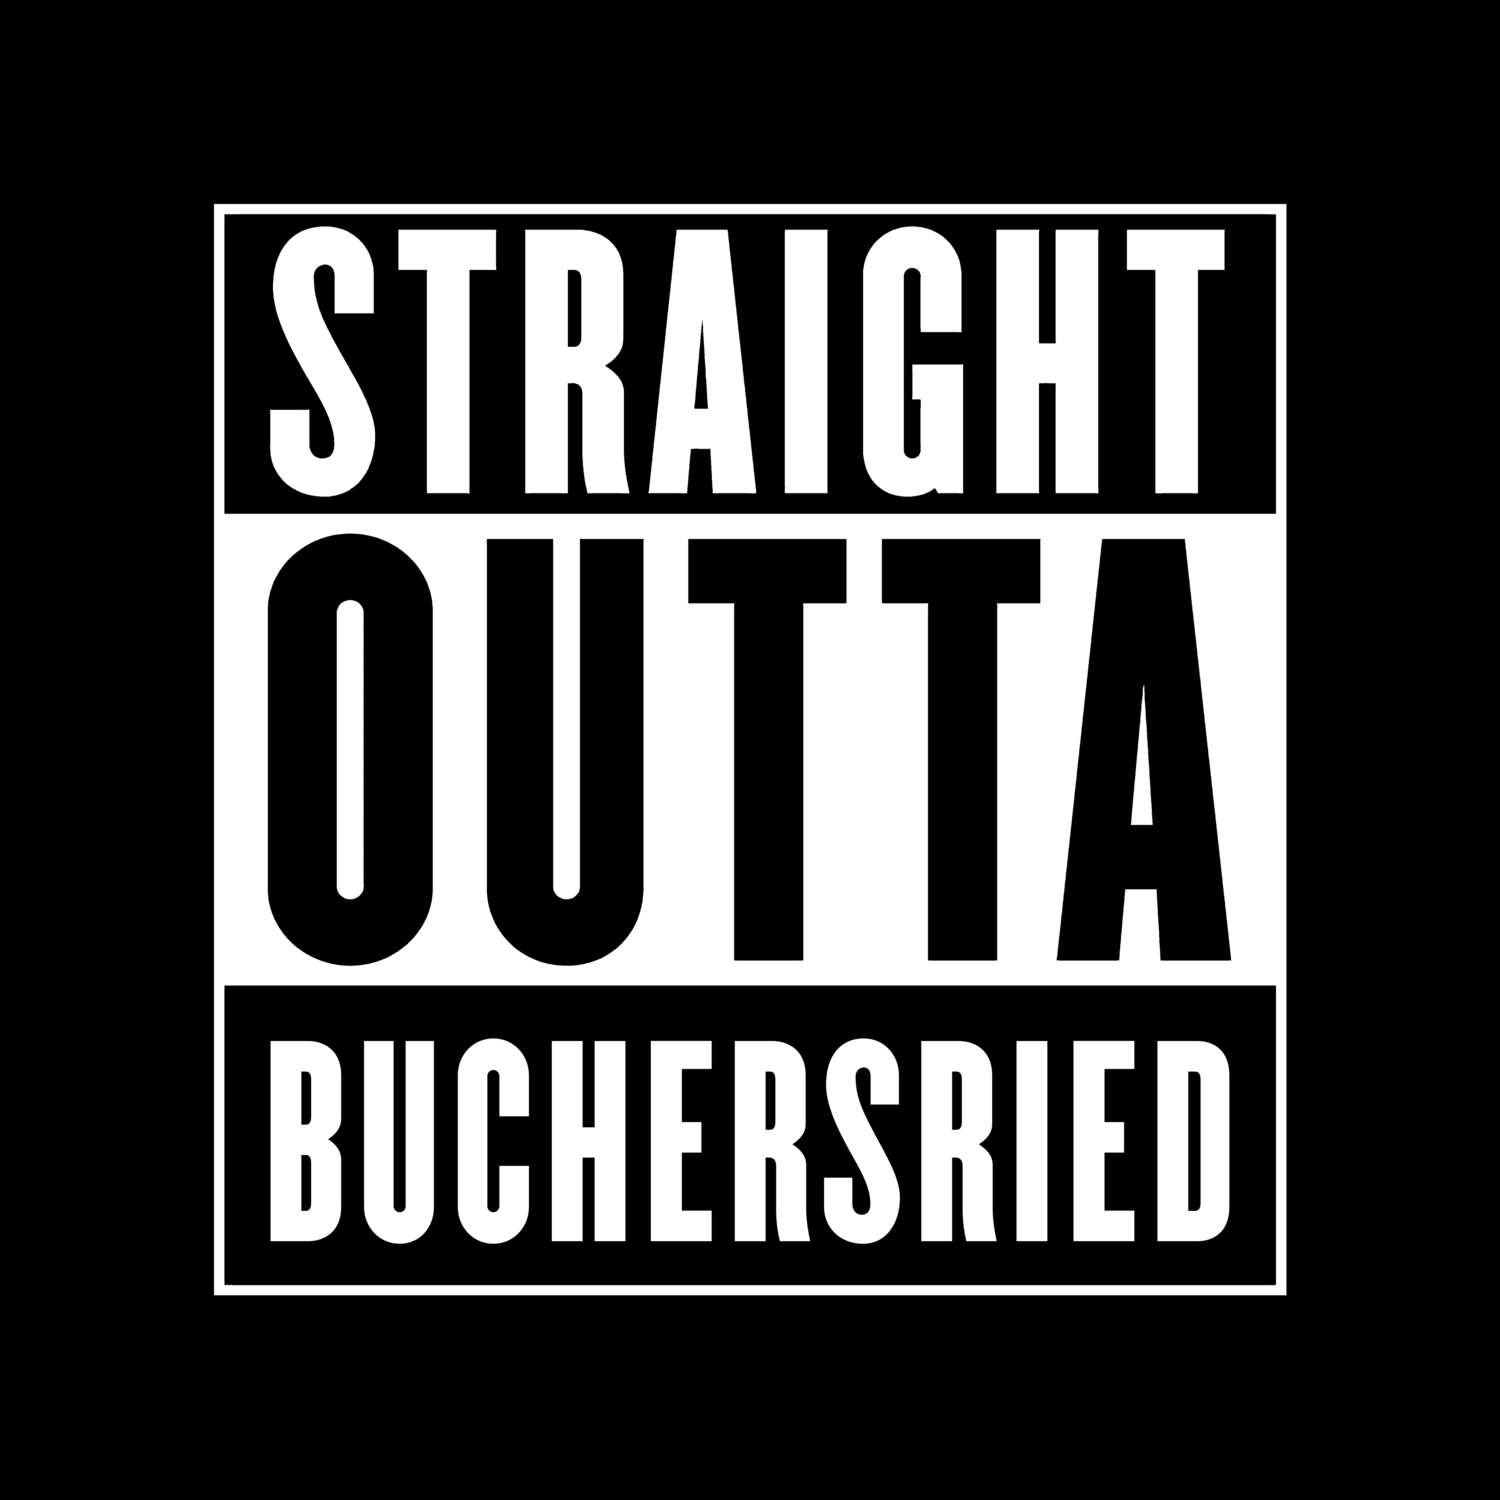 Buchersried T-Shirt »Straight Outta«